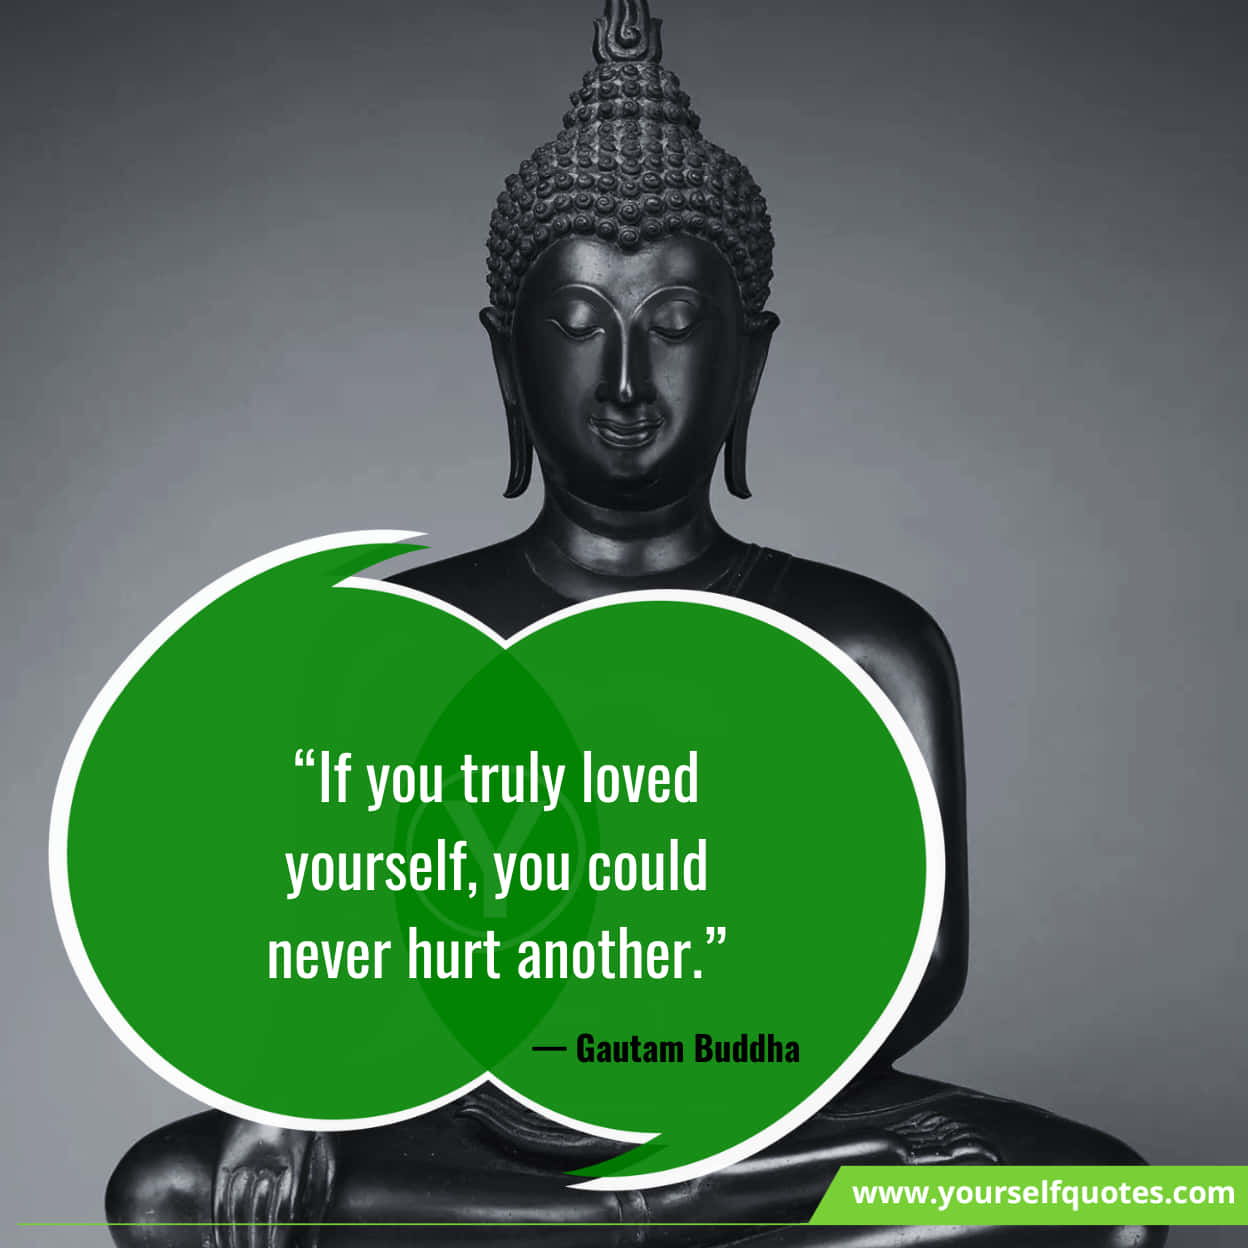 Gautam Buddha Quotes For Love